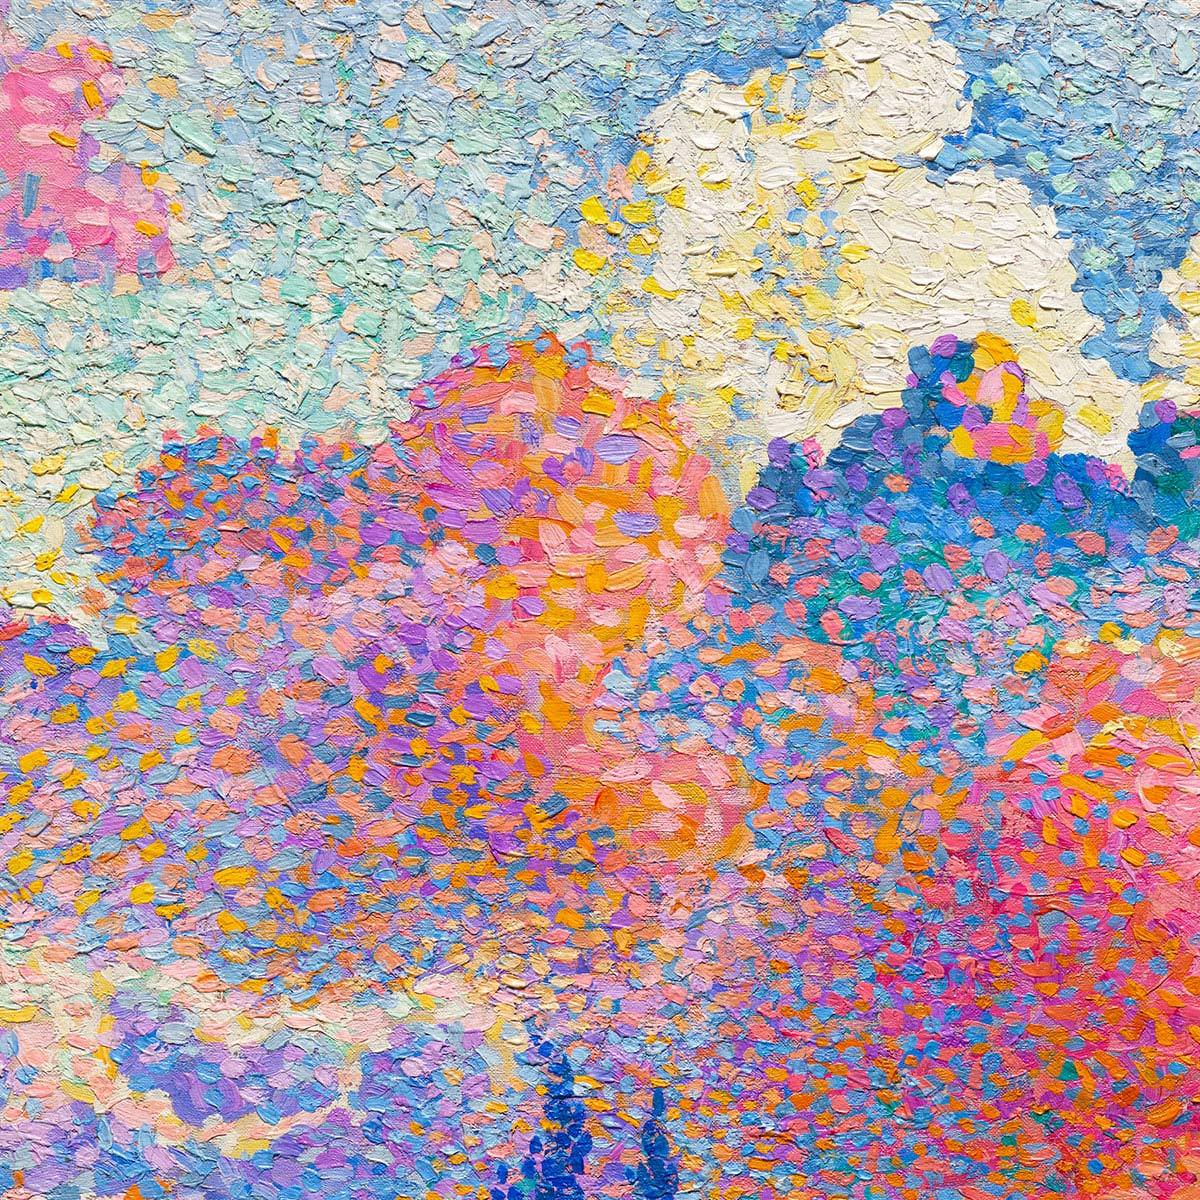 The Pink Cloud by Henri Edmond Cross